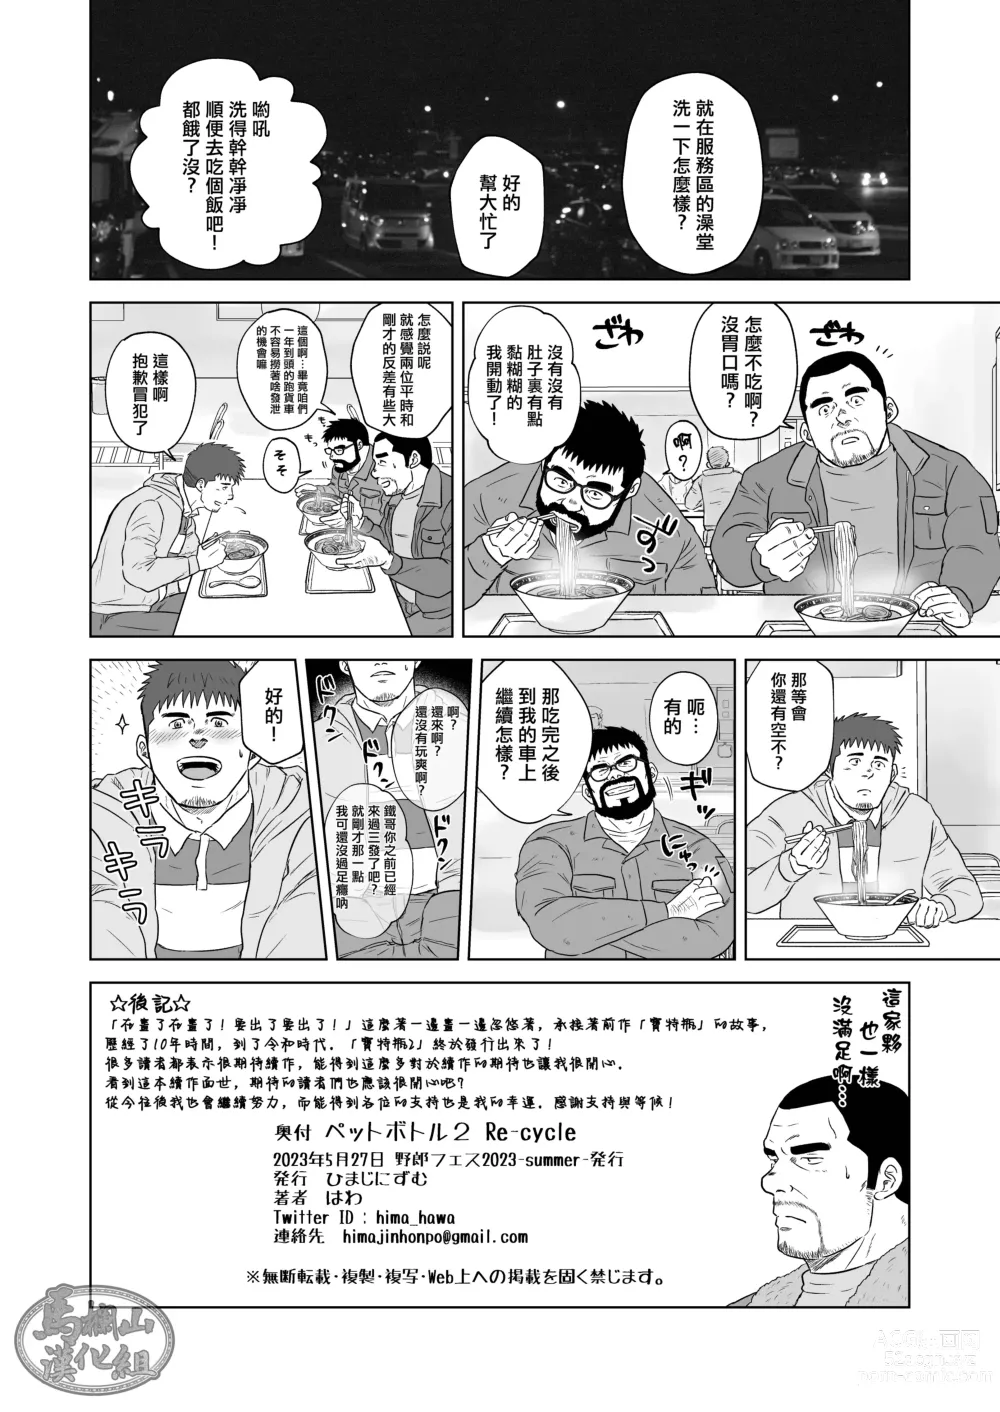 Page 21 of doujinshi 宝特瓶2